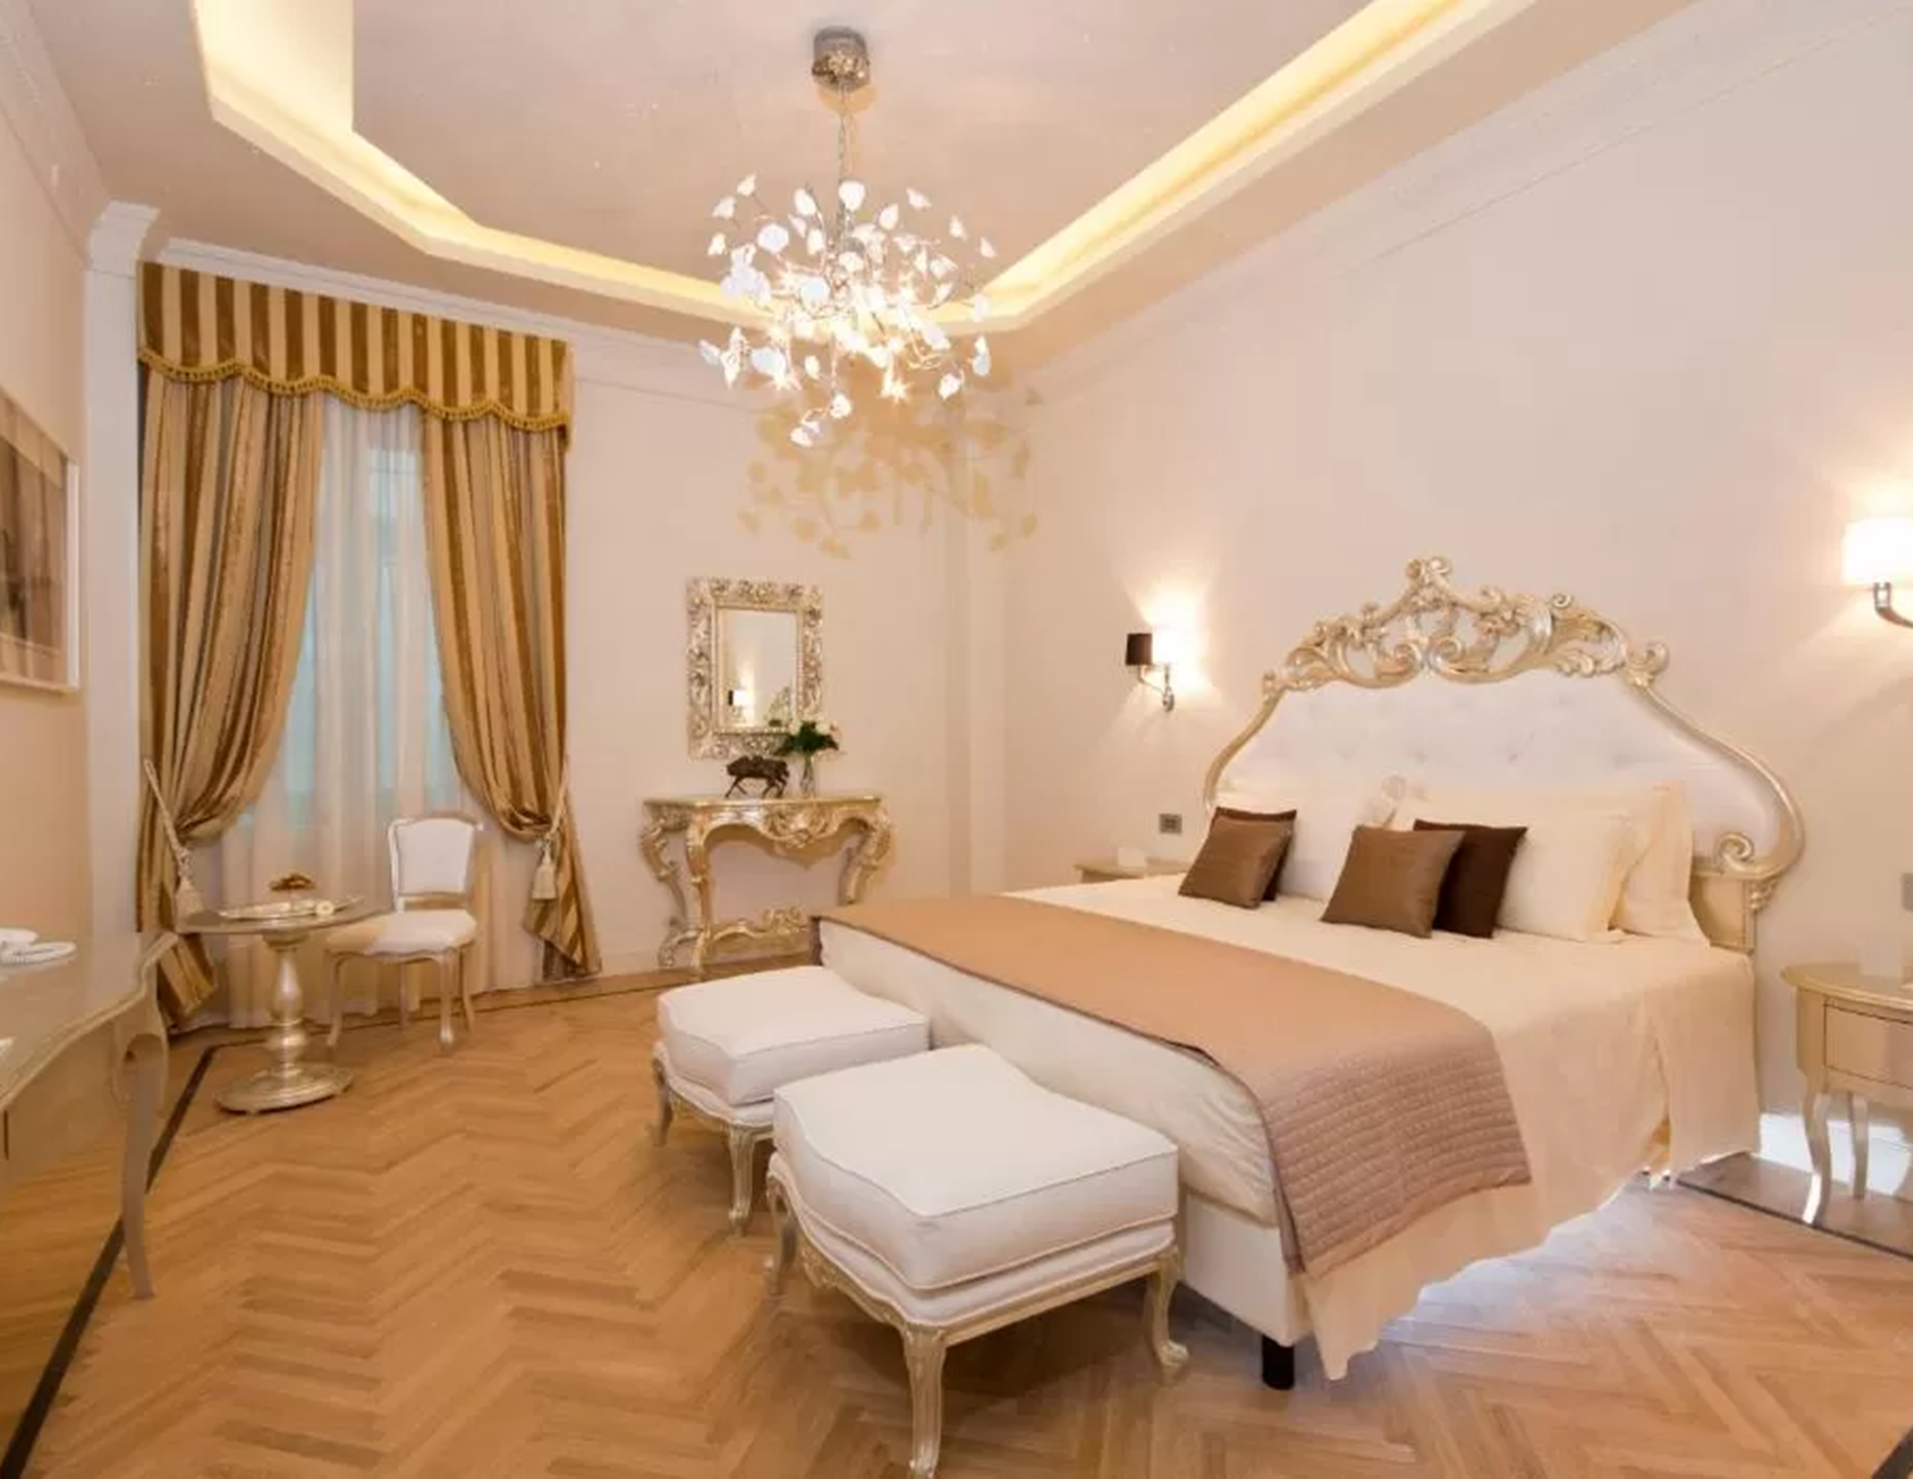 Grand Hotel Da Vinci - Room 2